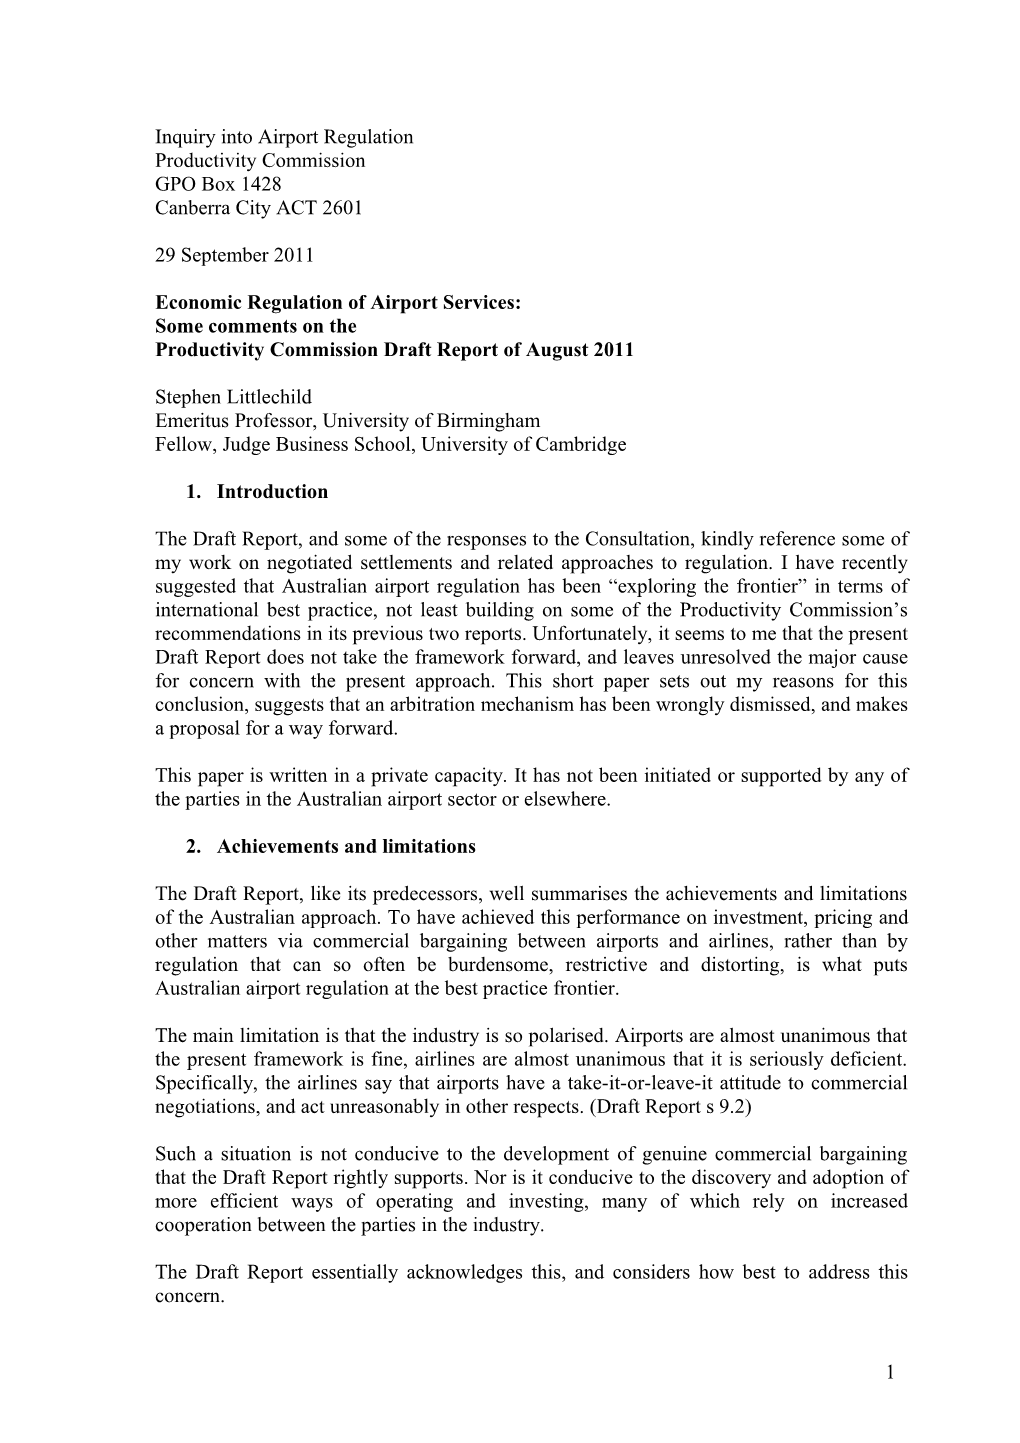 Submission DR116 - Stephen Littlechild - Economic Regulation of Airport Services - Public